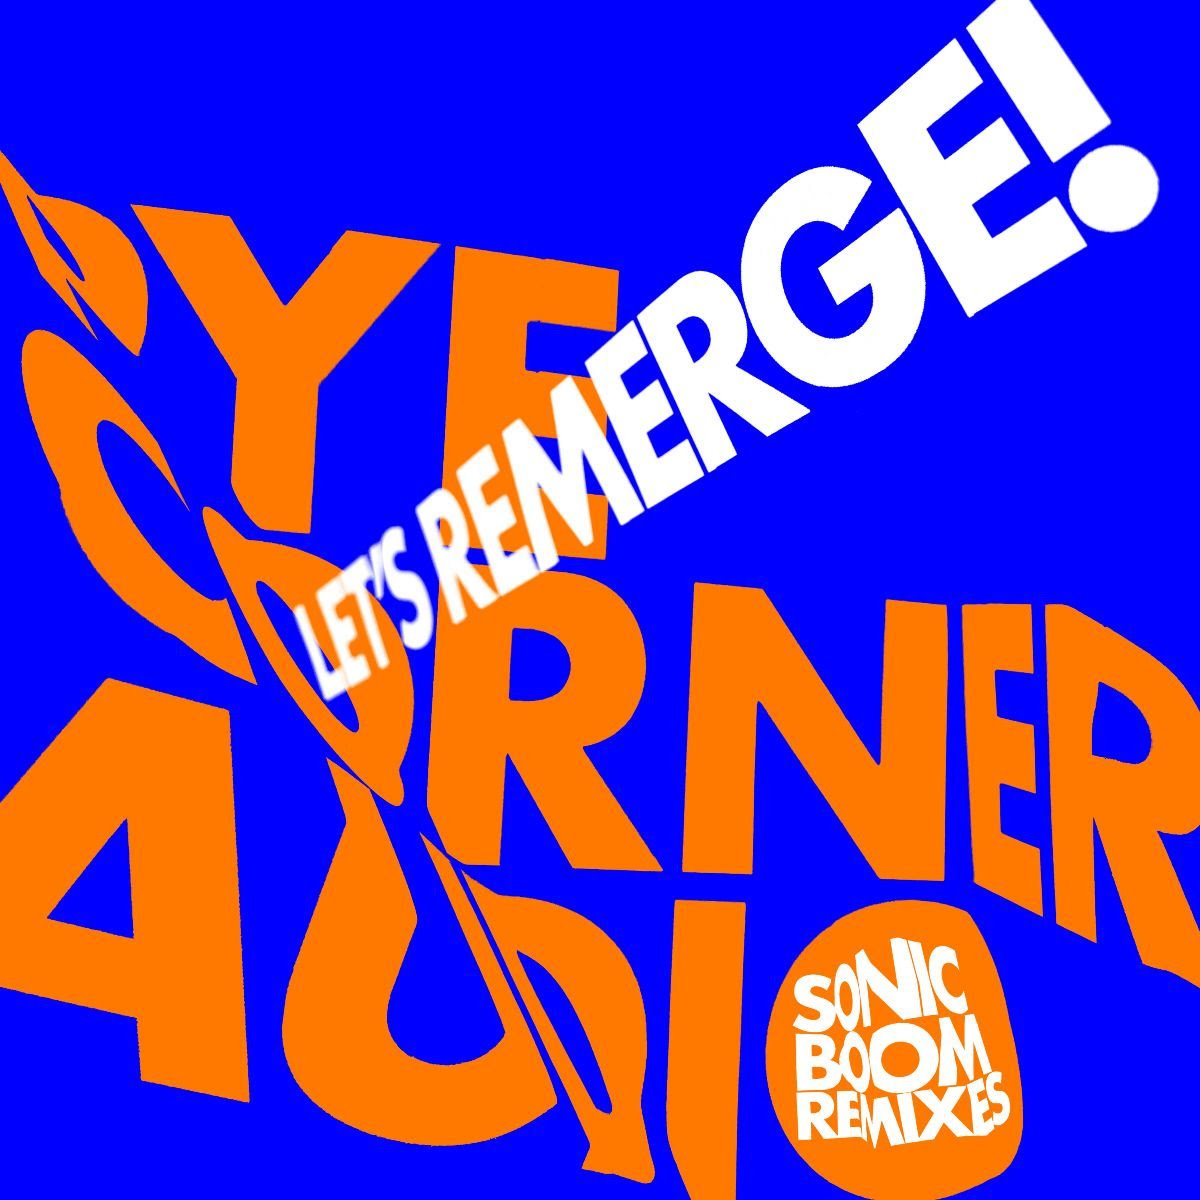 Sonic Cathedral Pye Corner Audio - Let’s Remerge! (Sonic Boom Remixes) (Orange Vinyl)